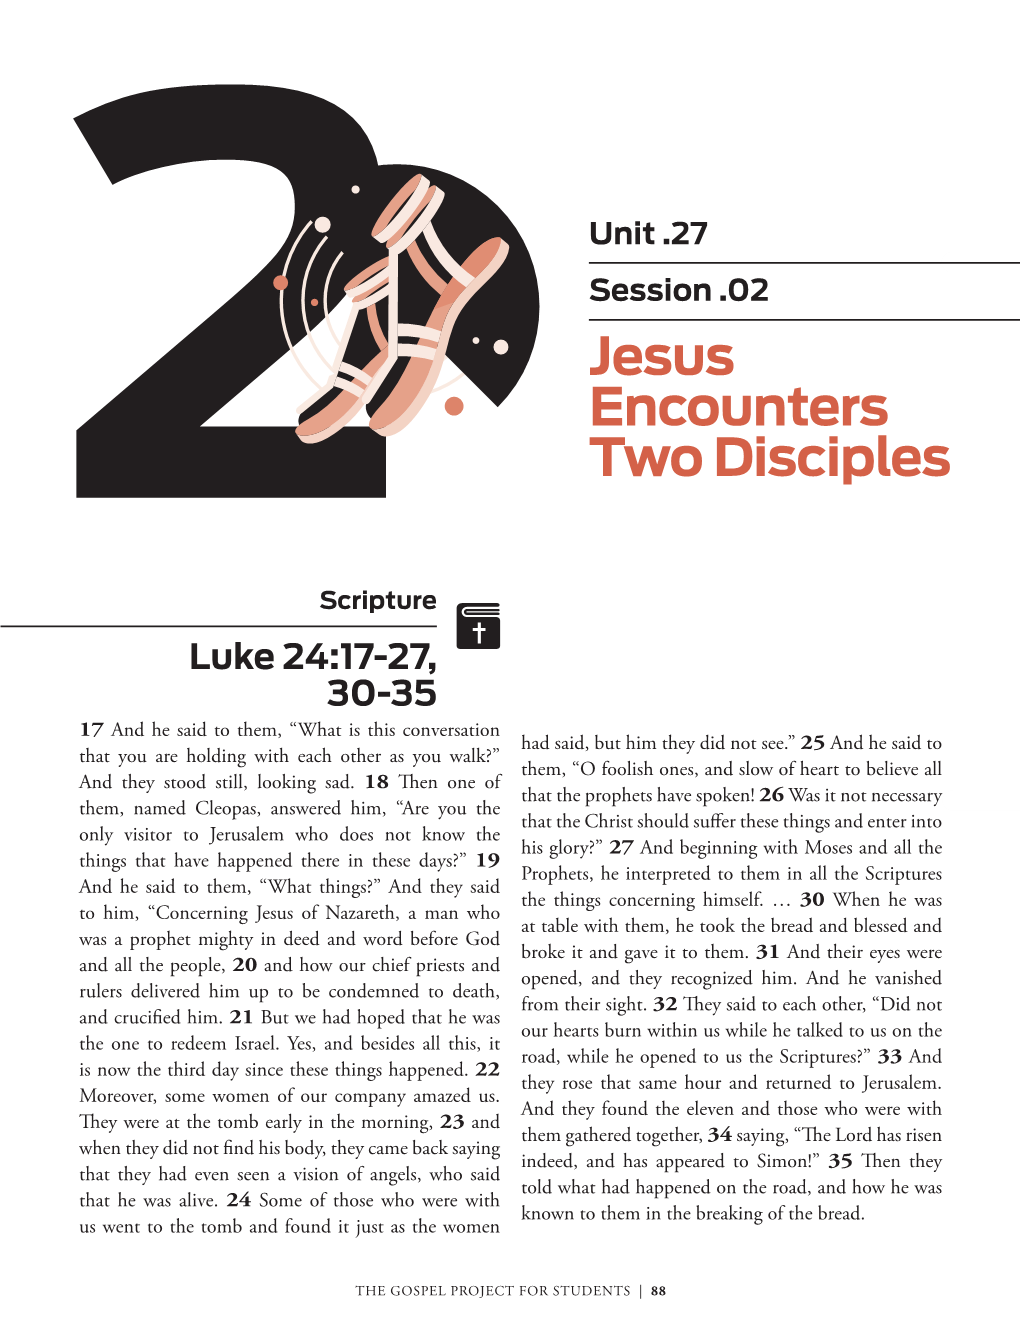 Jesus Encounters Two Disciples